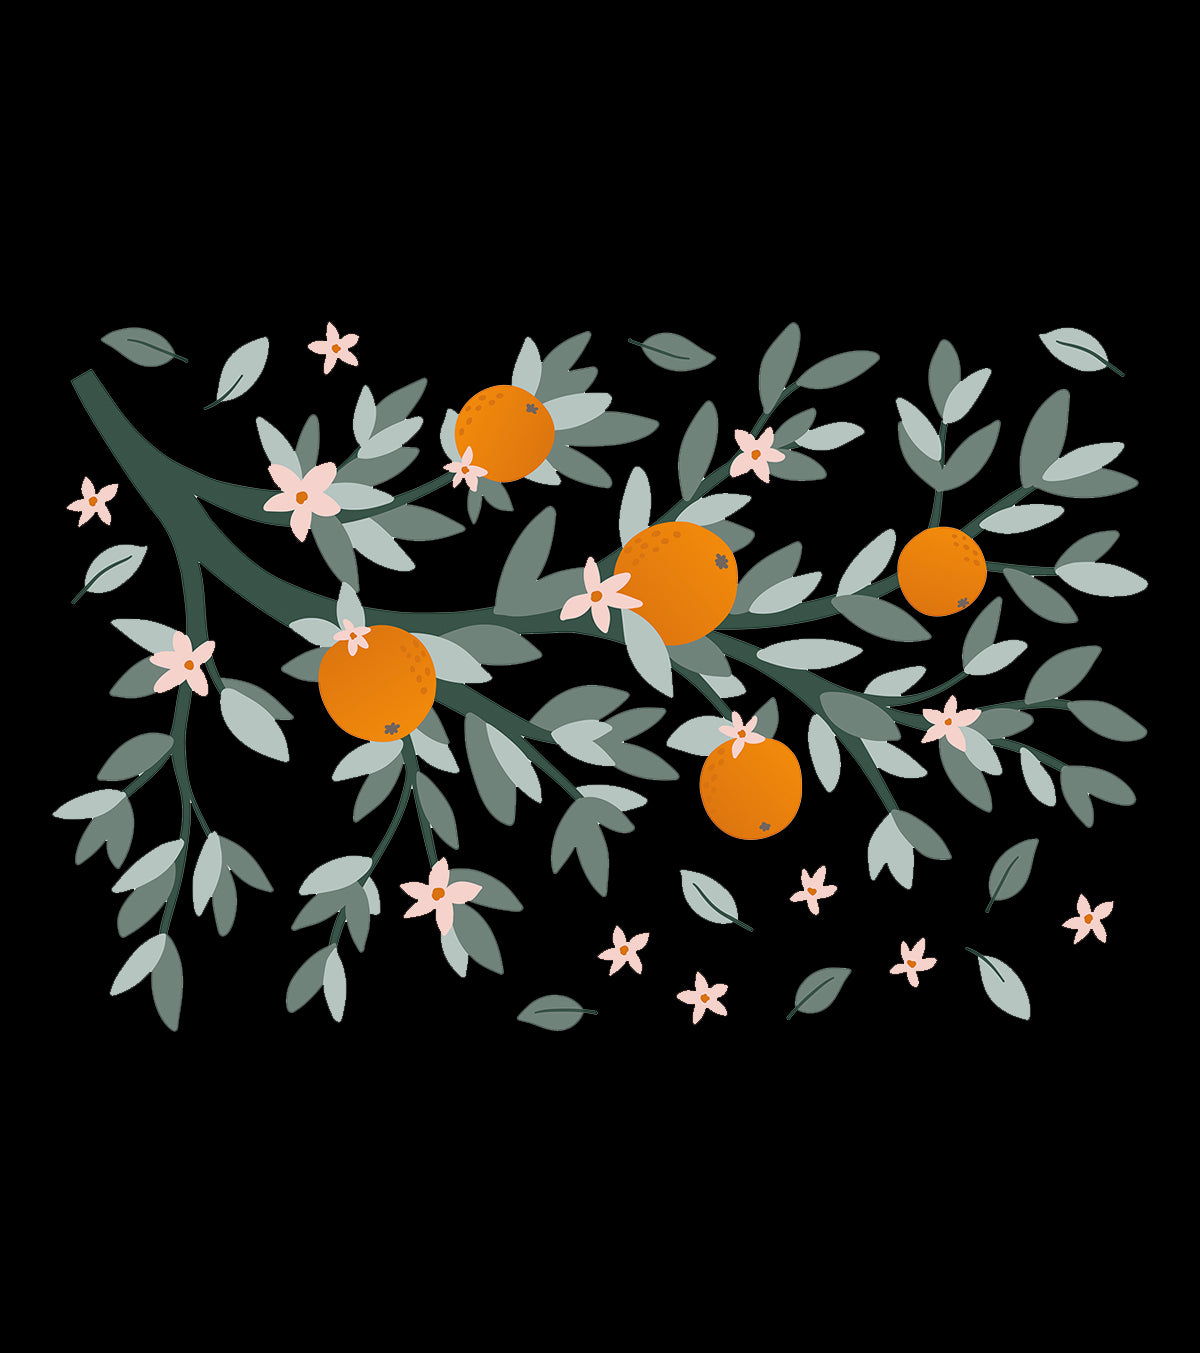 LOUISE - Adhesivo grande - Ramas y naranjas